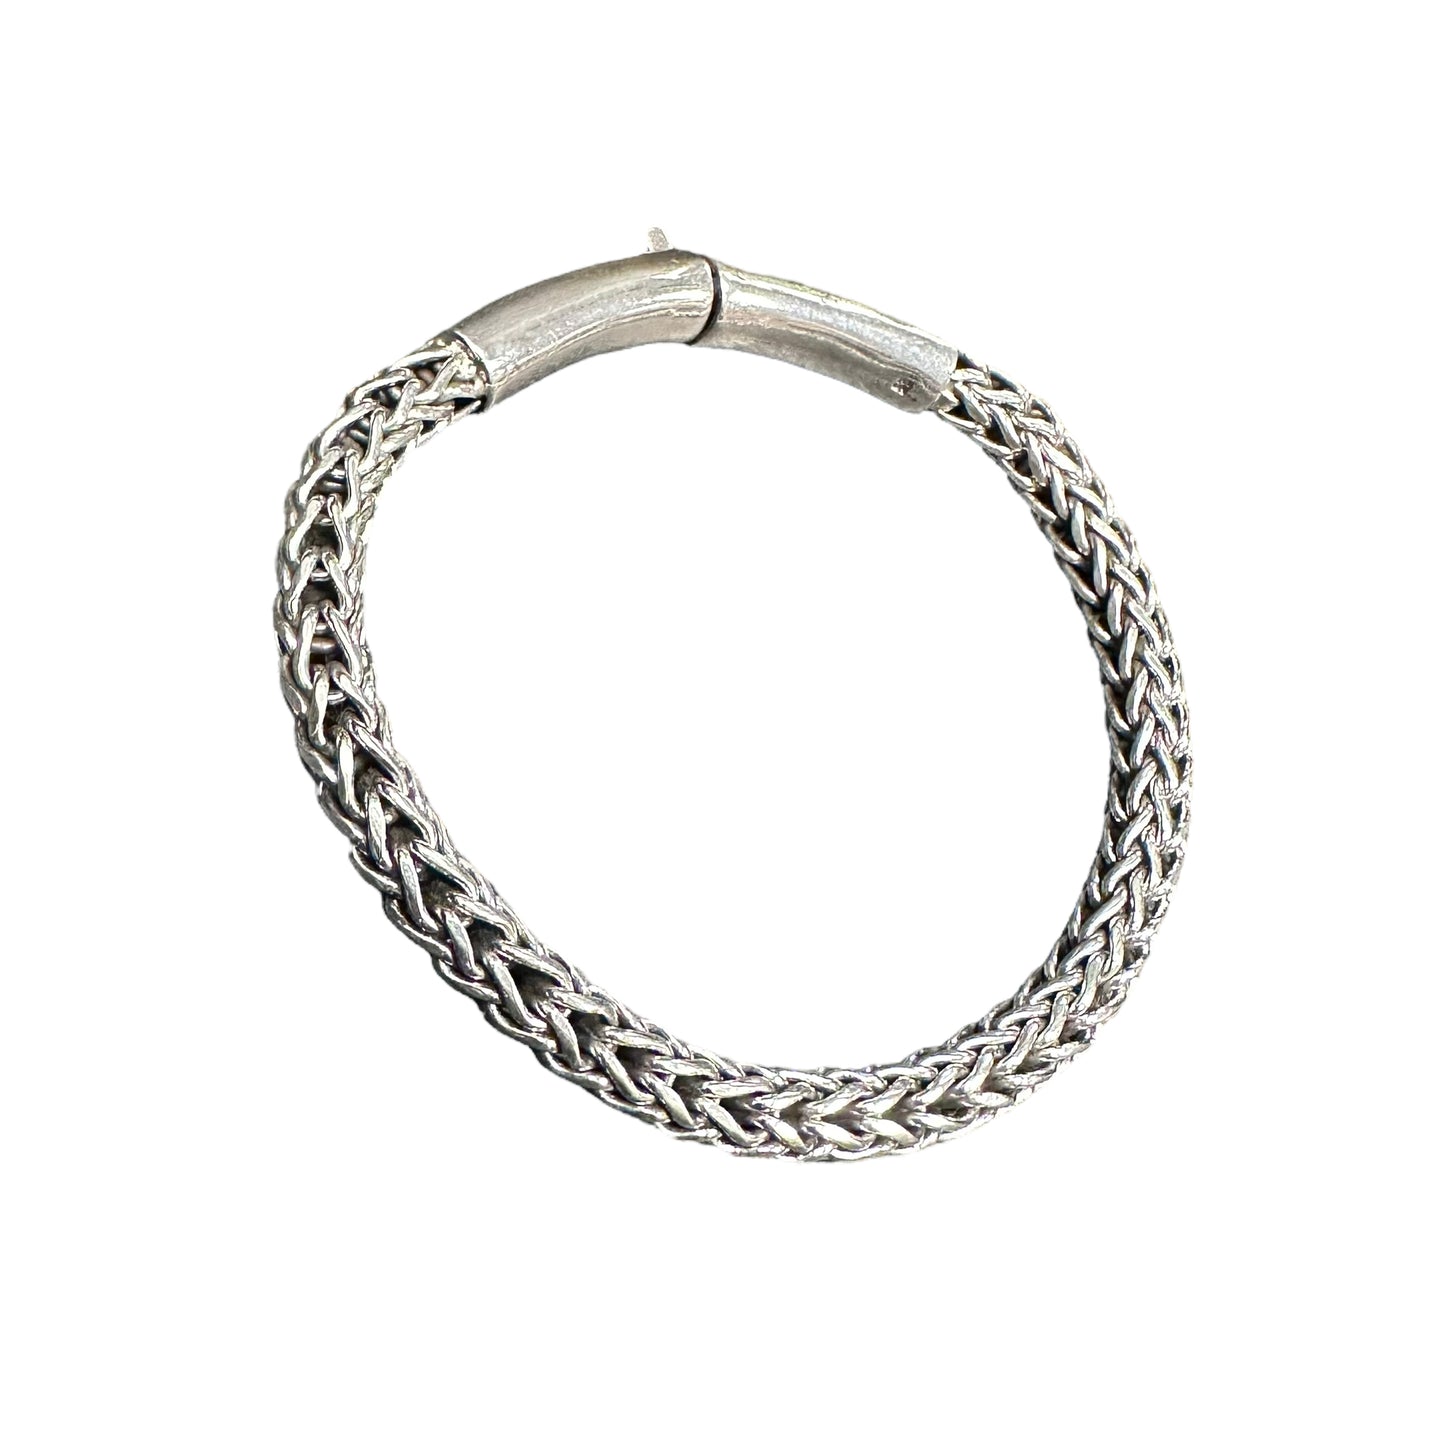 Handmade Bali Foxtail 7mm Sterling Silver Bracelet Chain